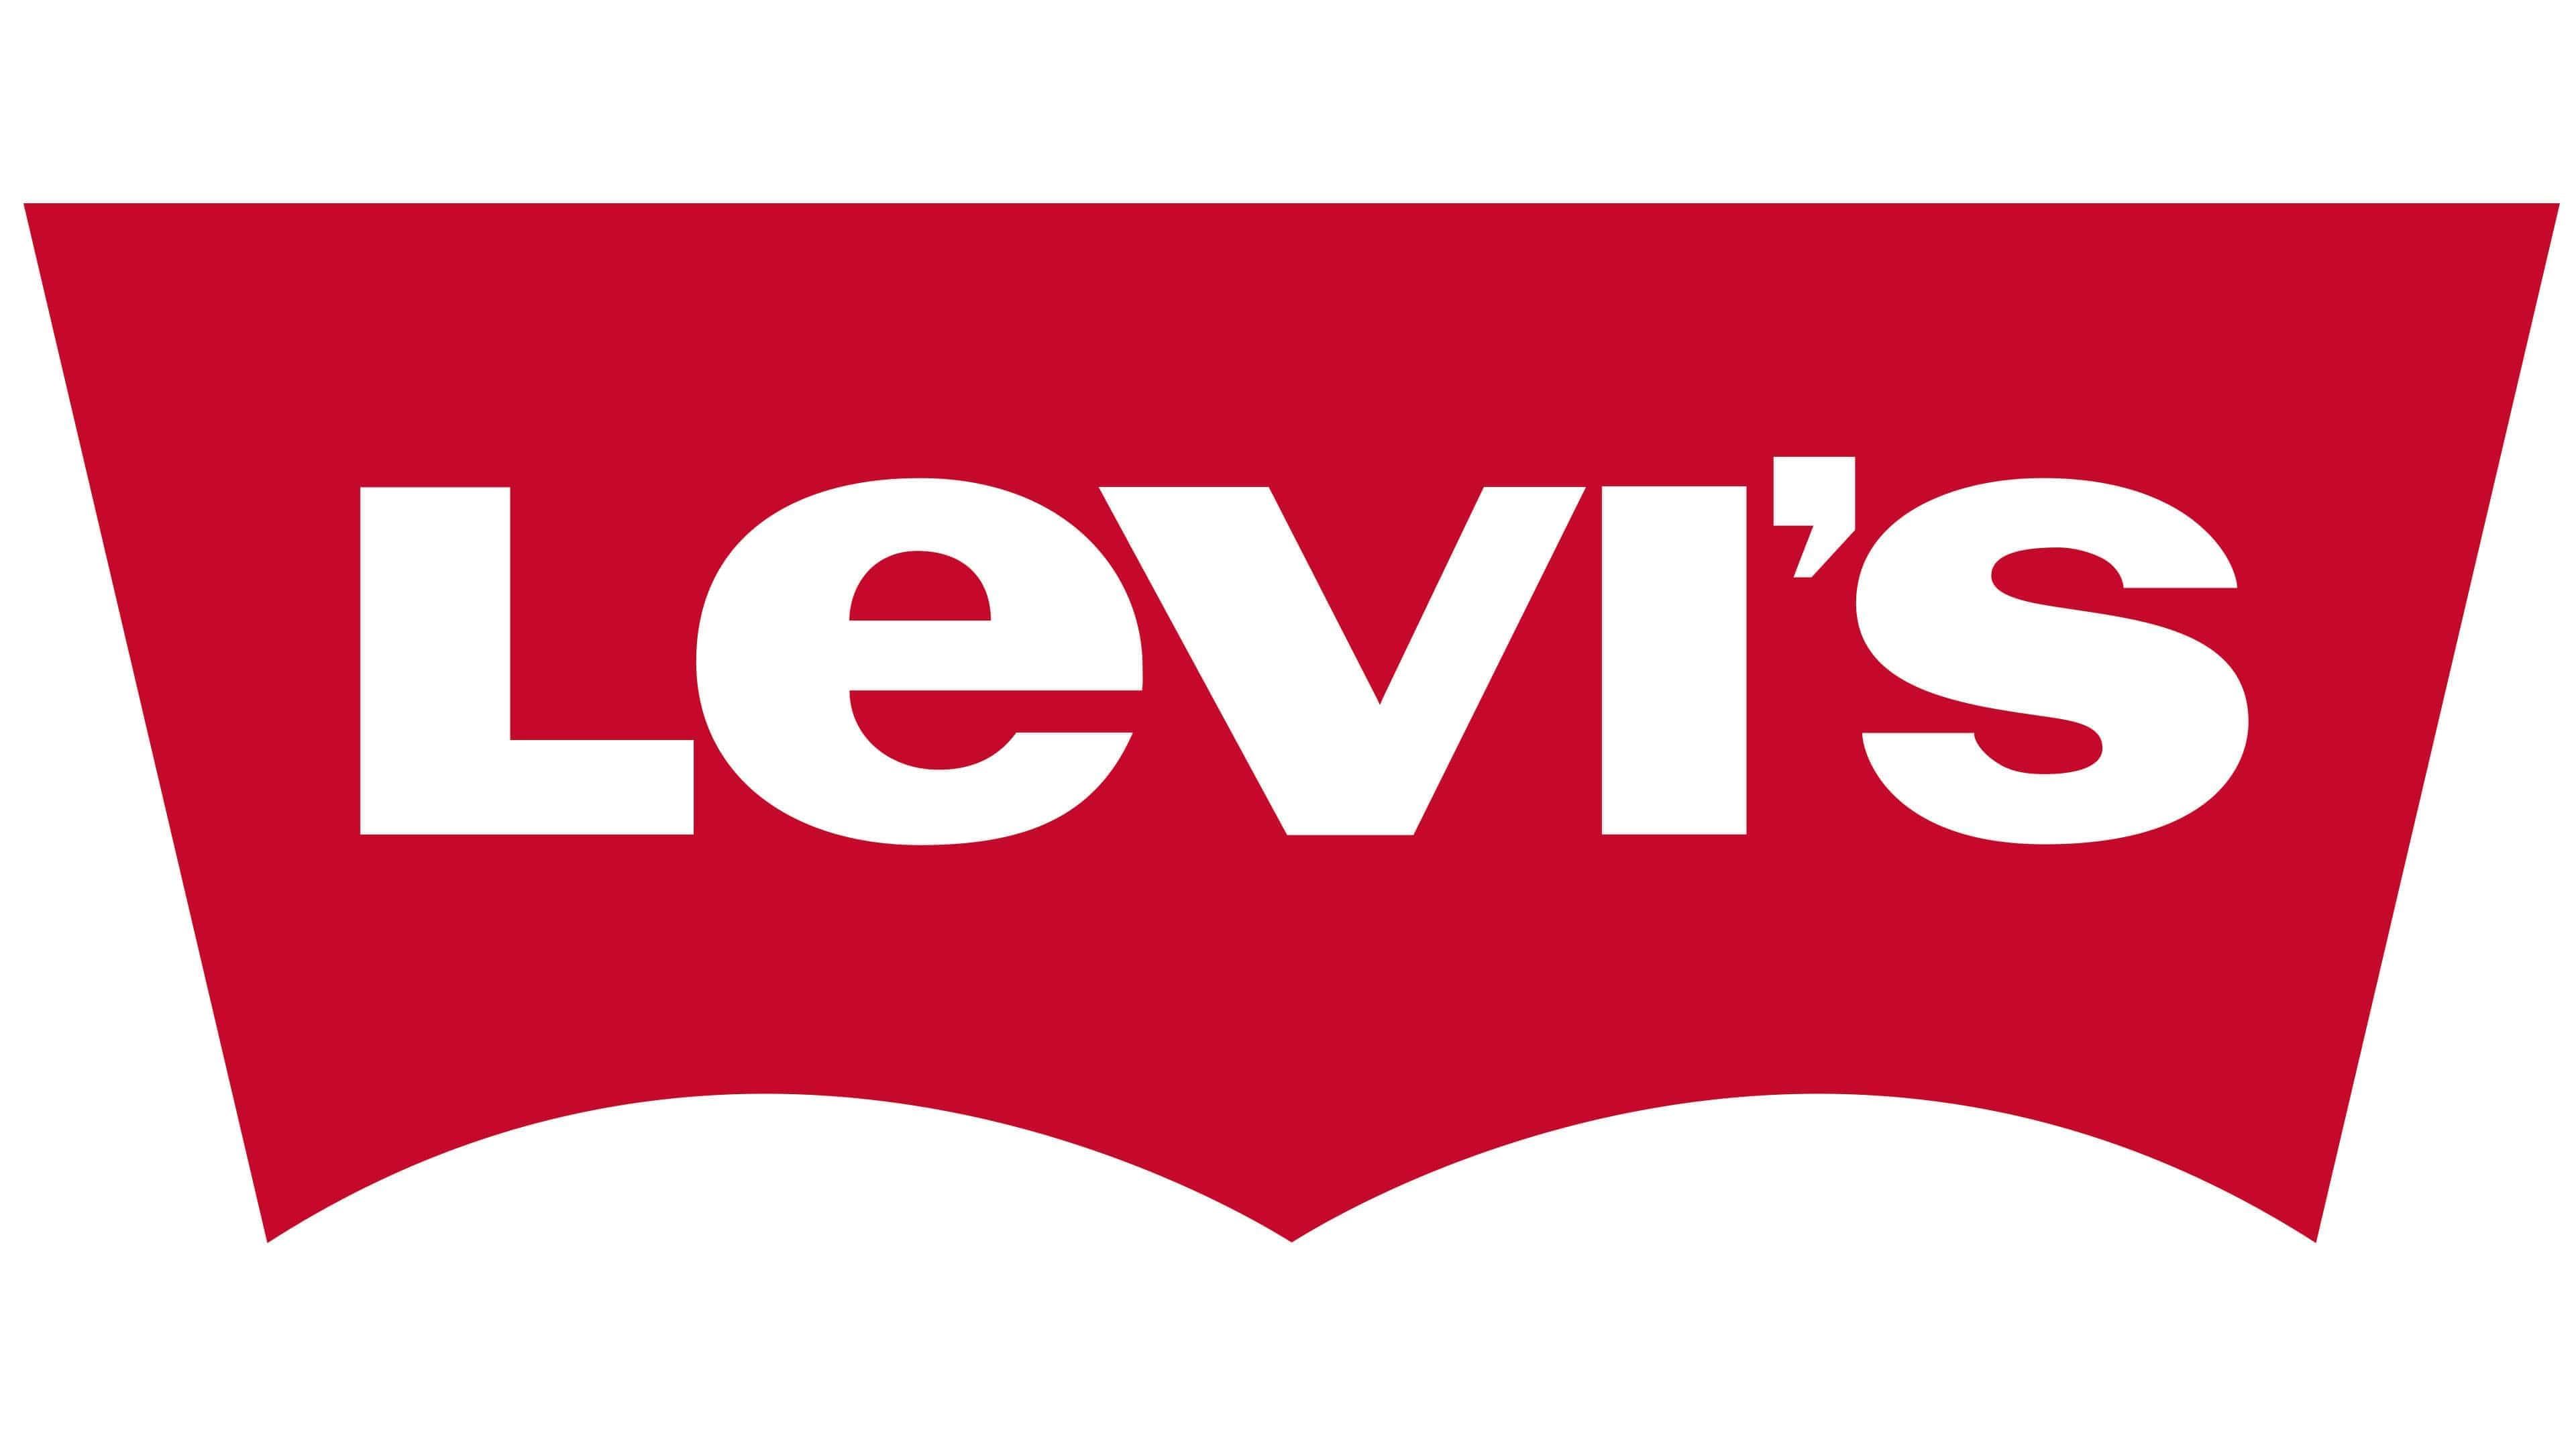 levis juntoz Off 71% - www.loverethymno.com